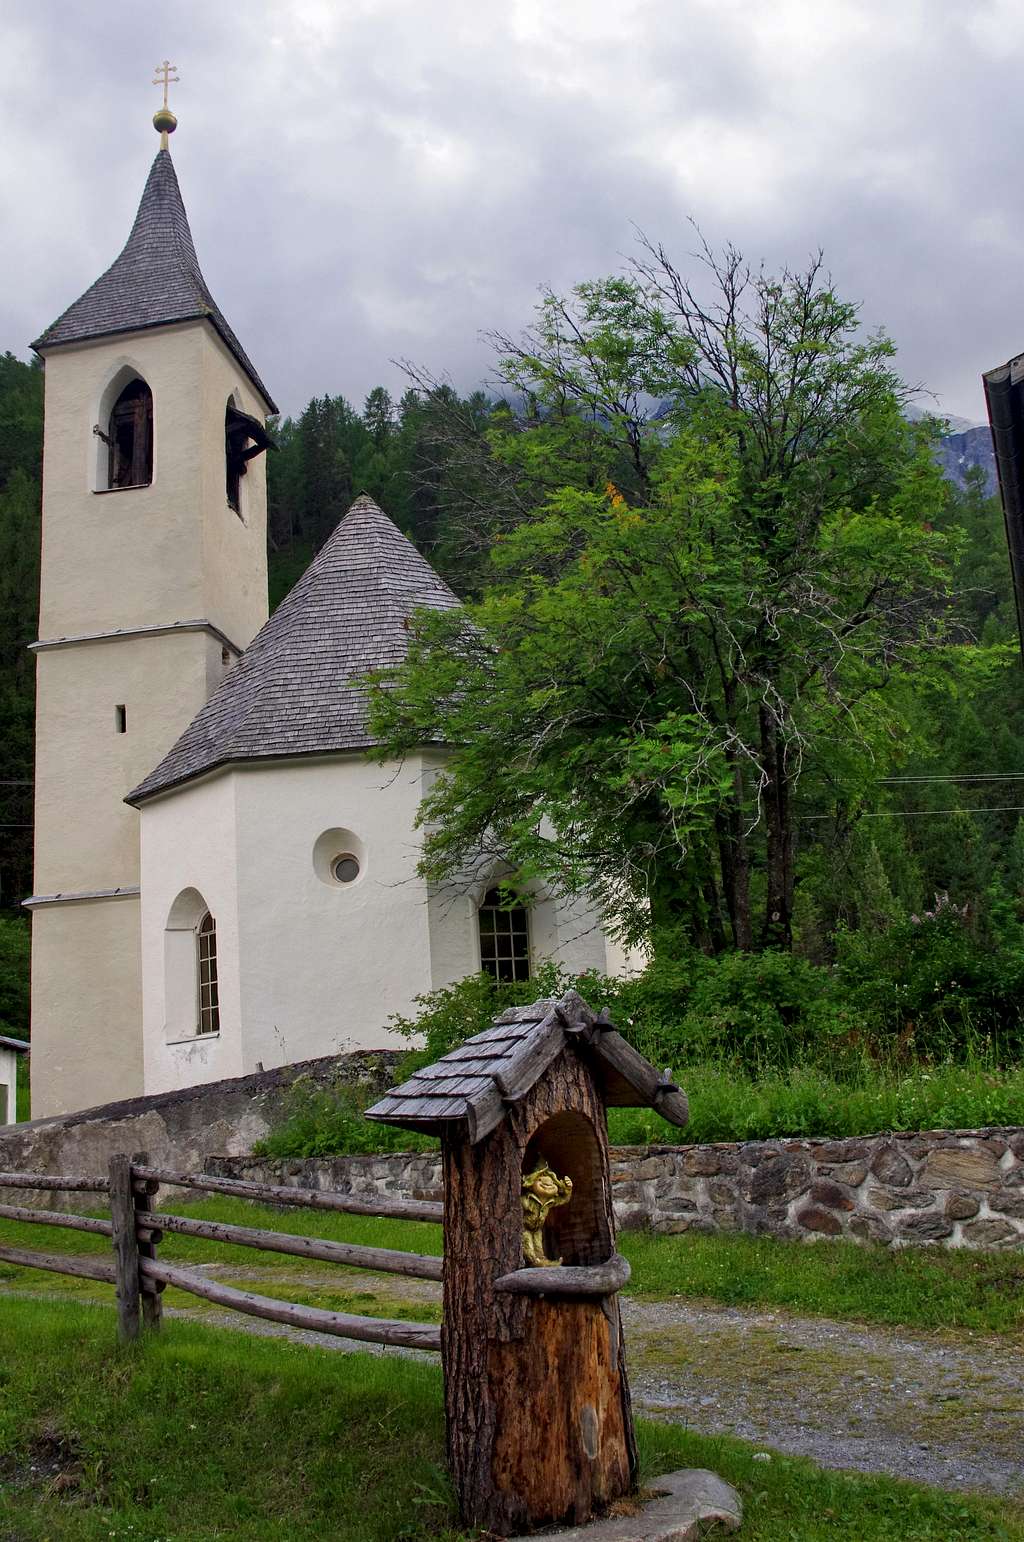 The old parish church of Solda/Sulden